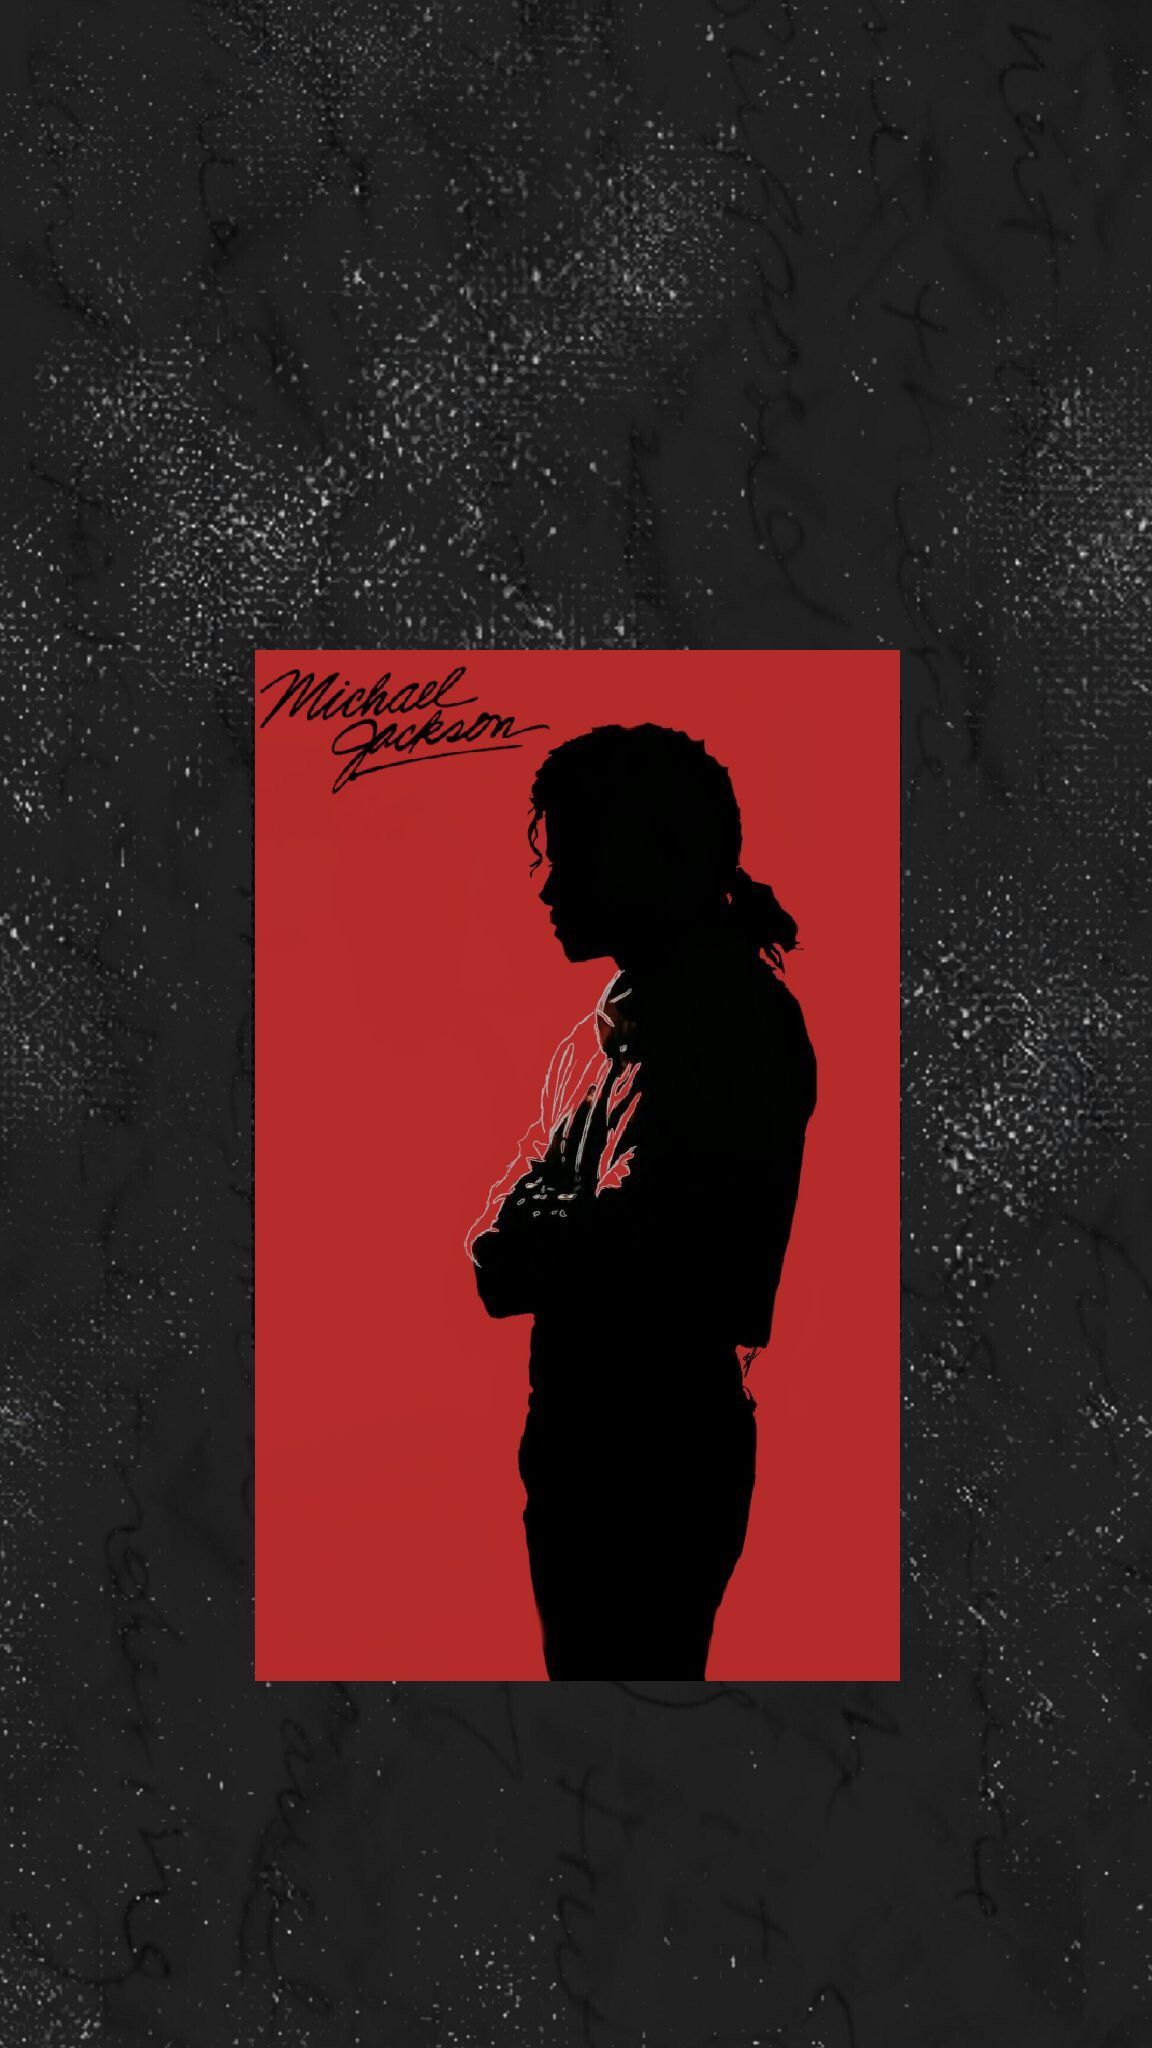 Michael jackson wallpaper, Michael .com